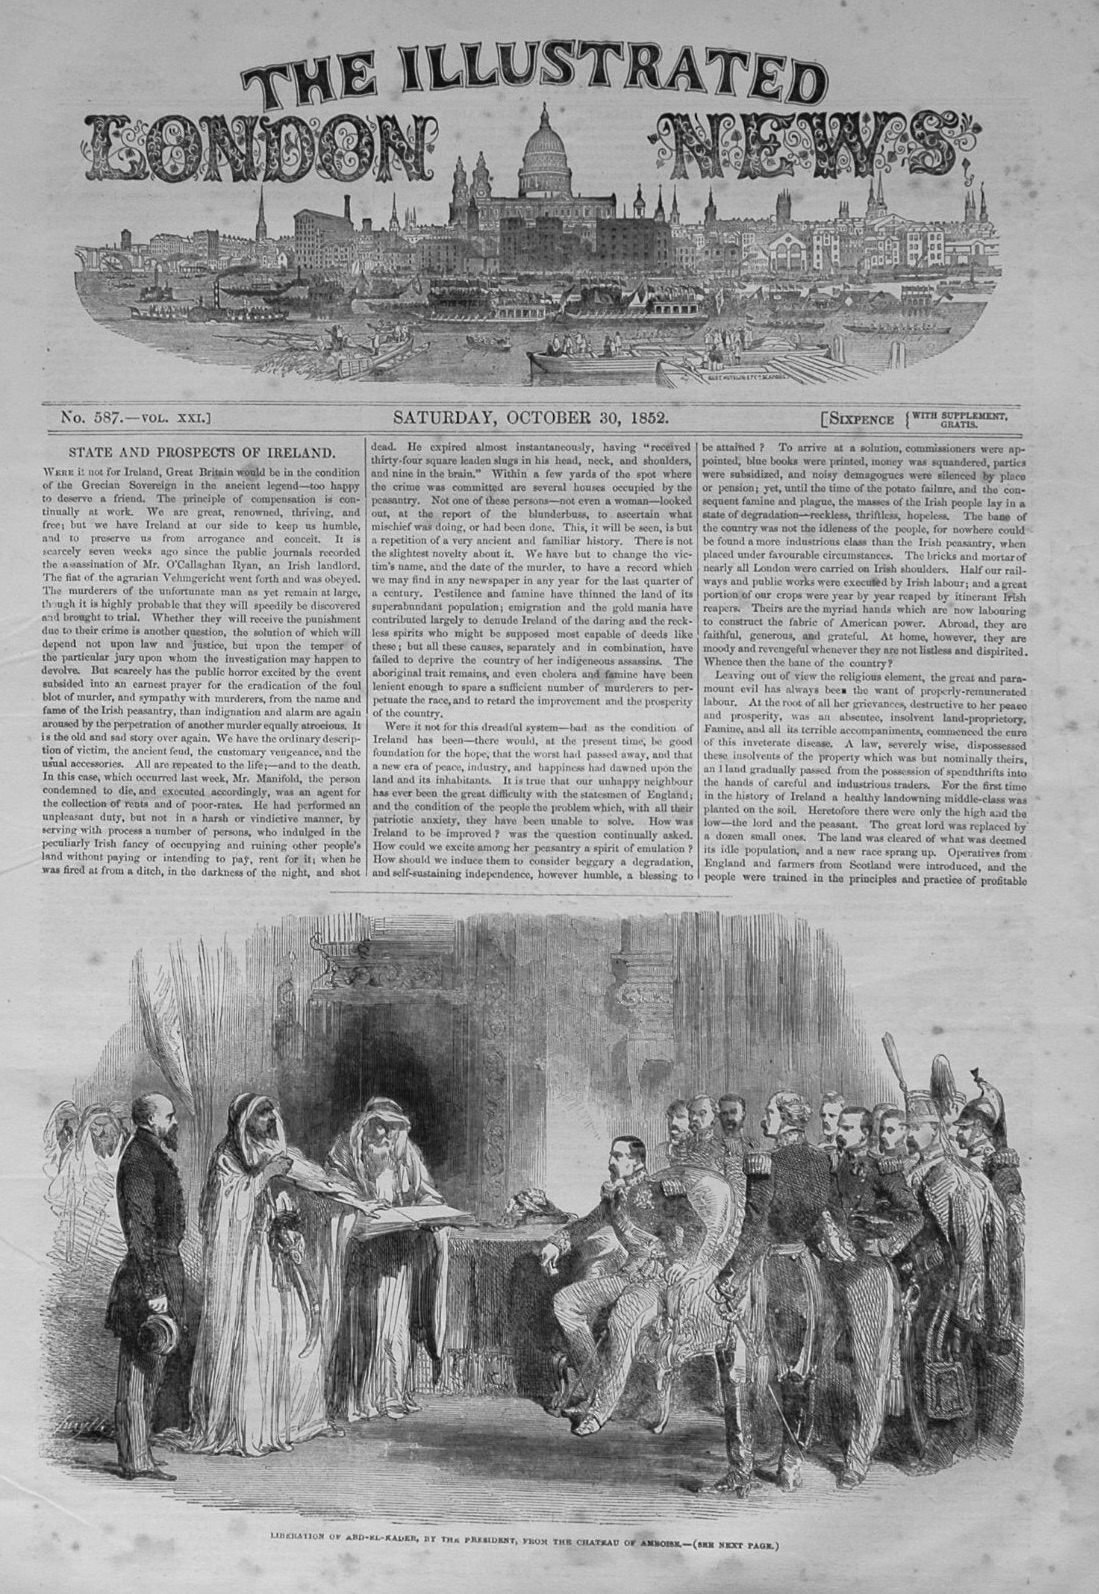 Illustrated London News October 30, 1852.